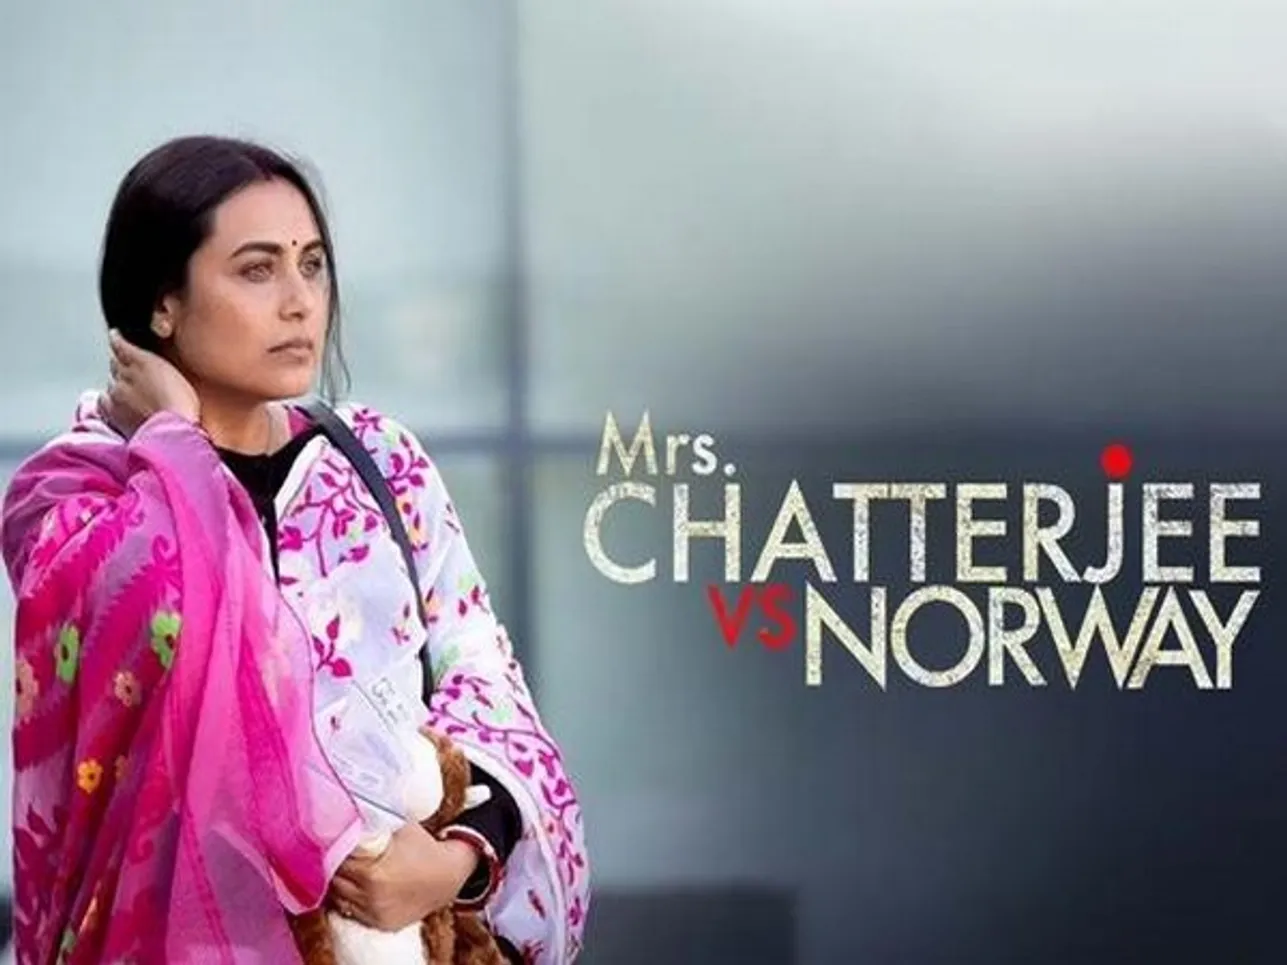 Mrs. Chatterjee vs Norway,